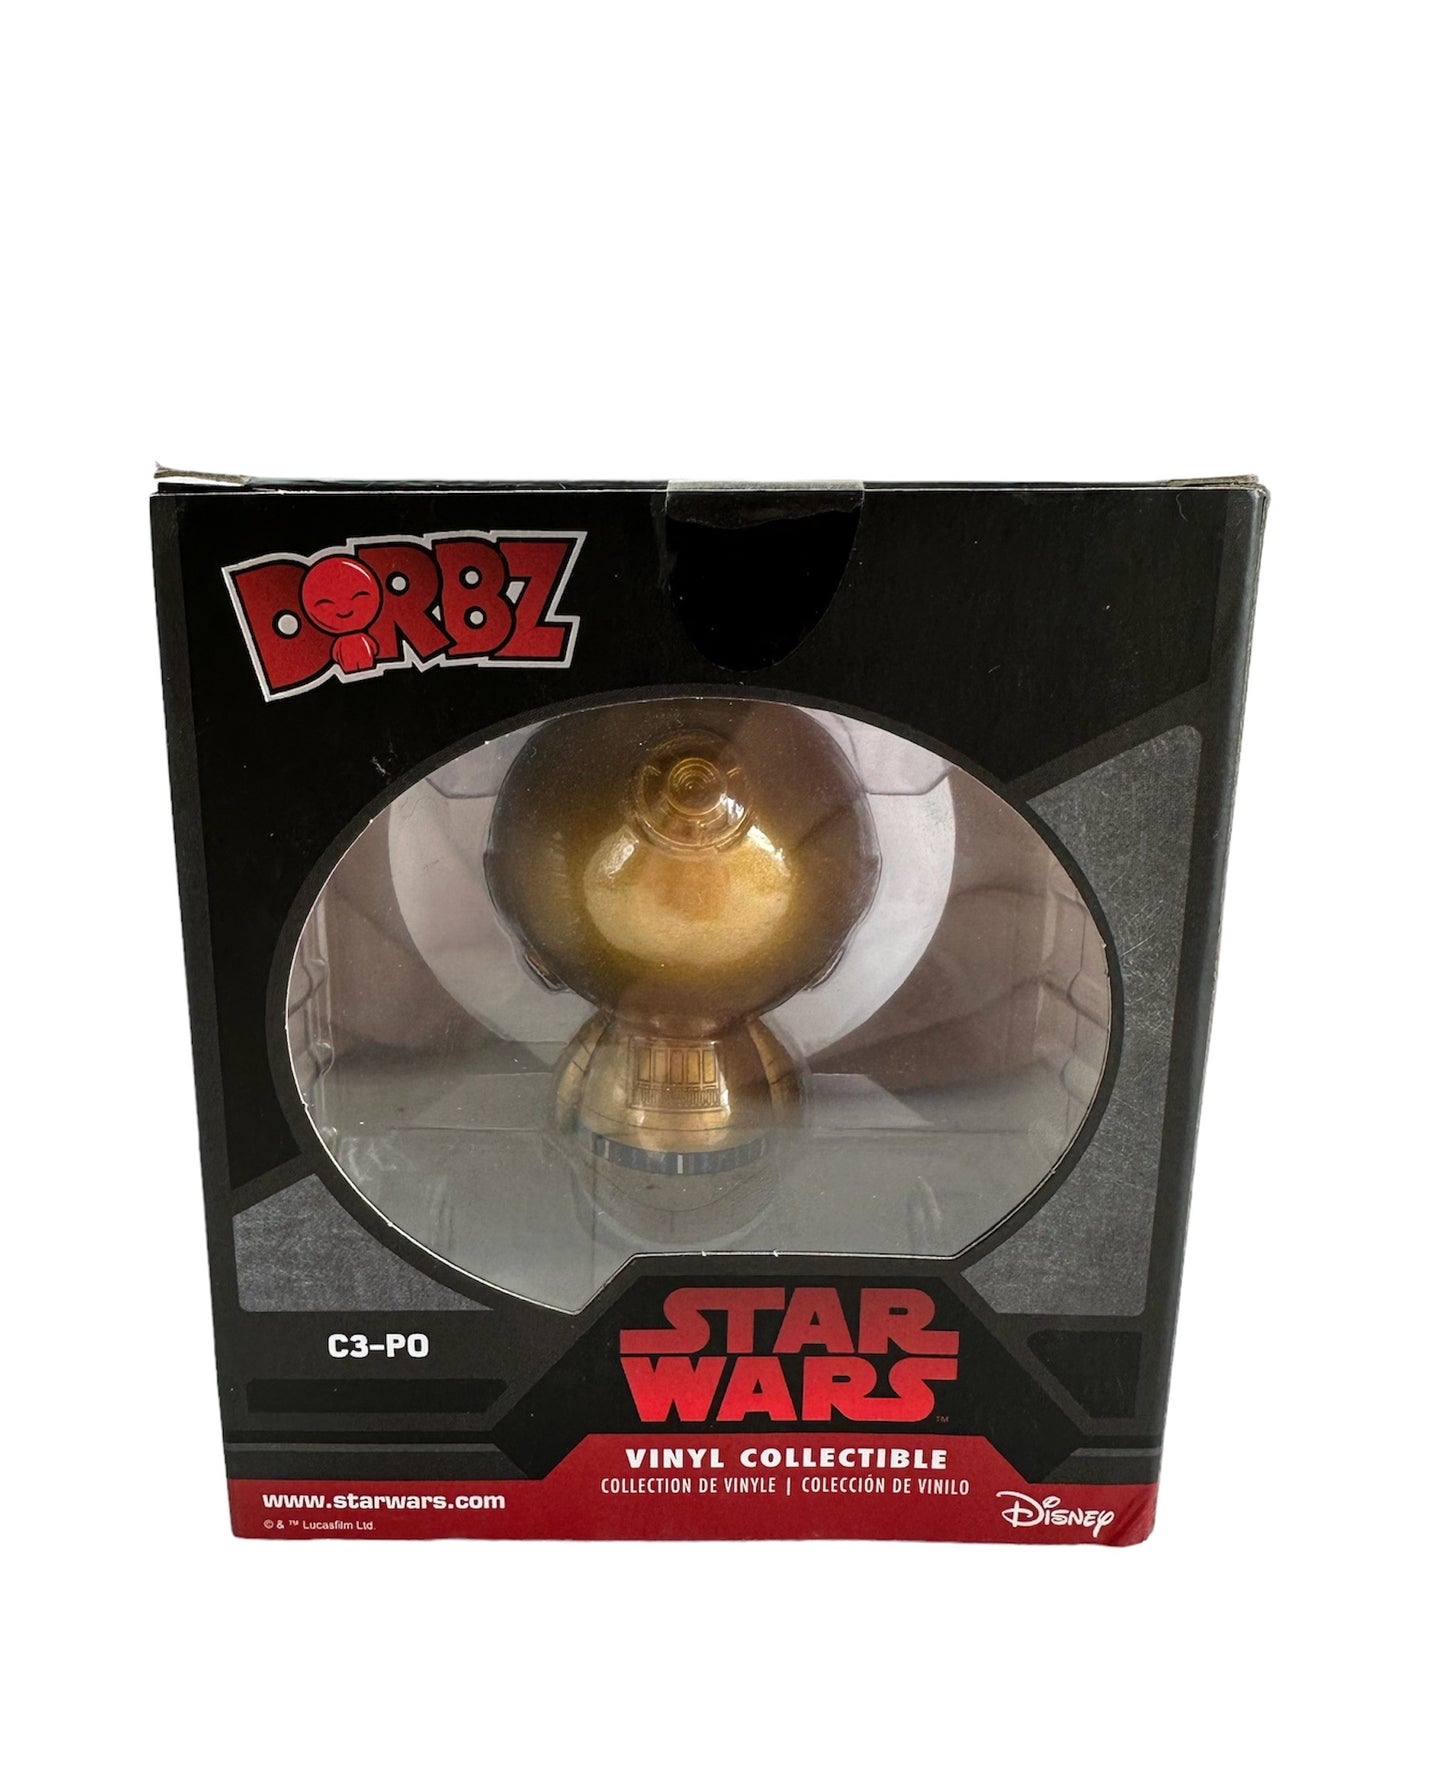 Star Wars The Original Trilogy 2017 Dorbz Special Edition C-3PO Vinyl Collectable Figure